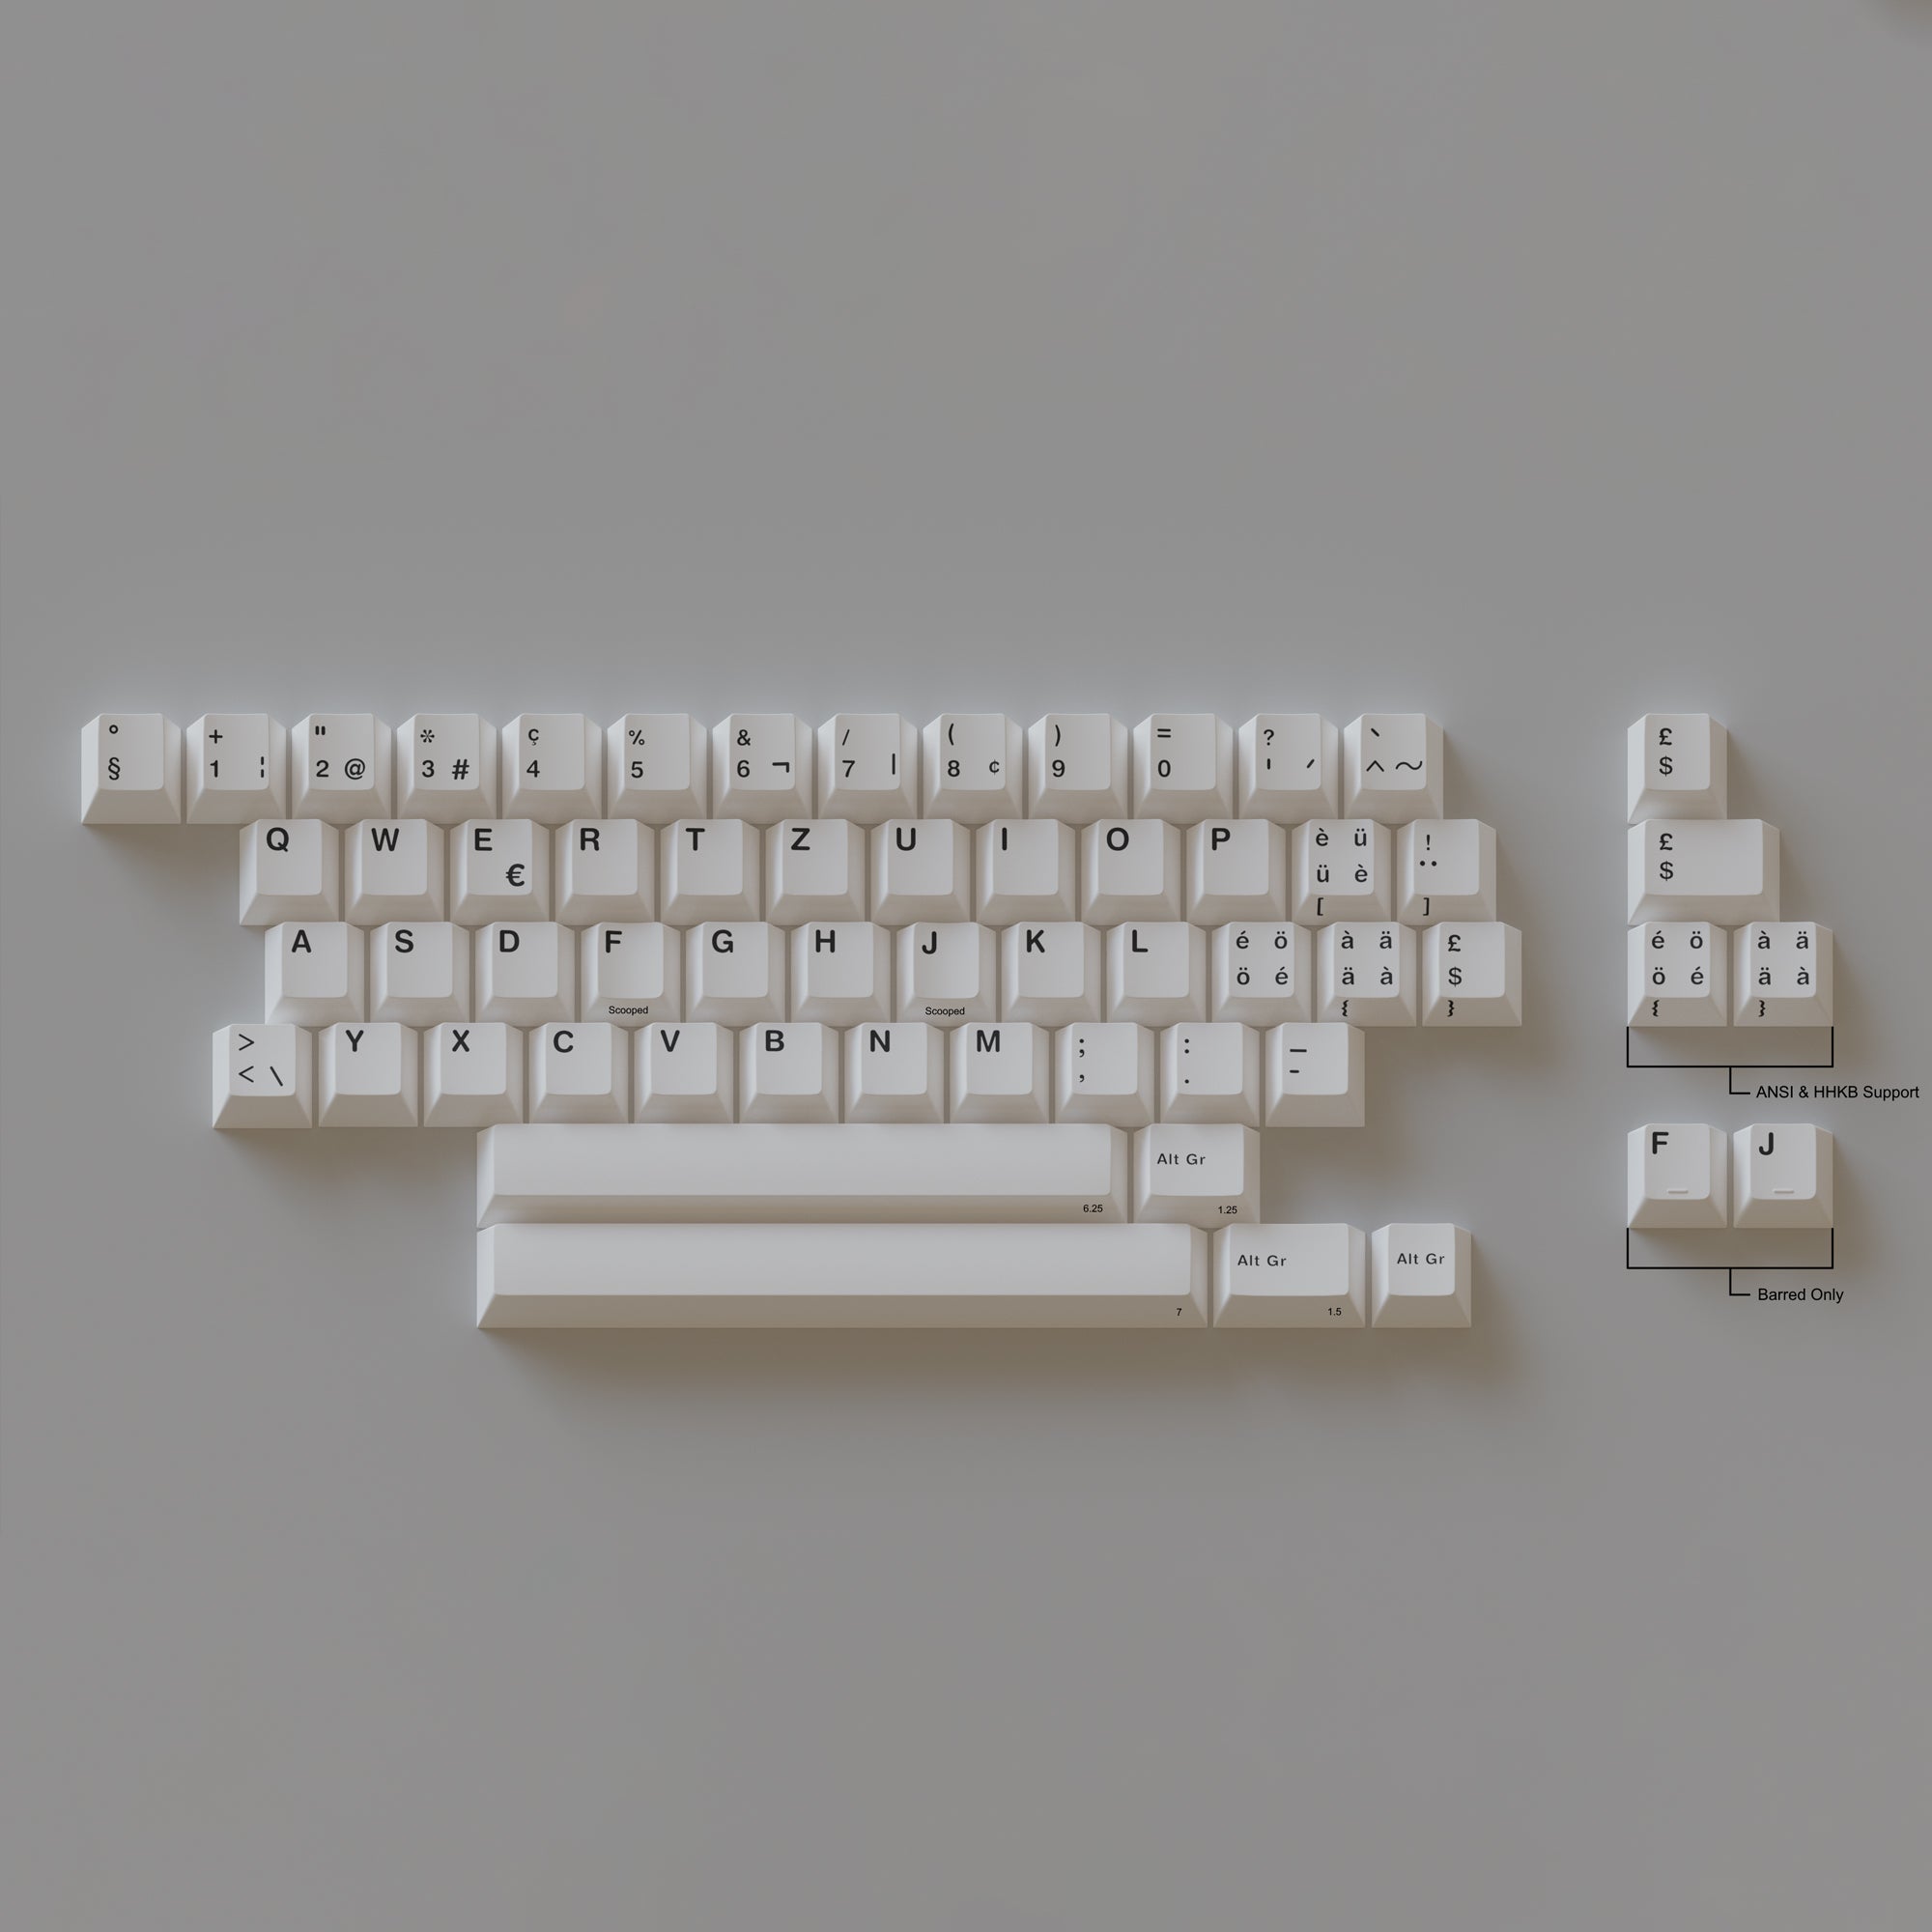 KBDfans Custom Keyboard GMK Swiss addon kit